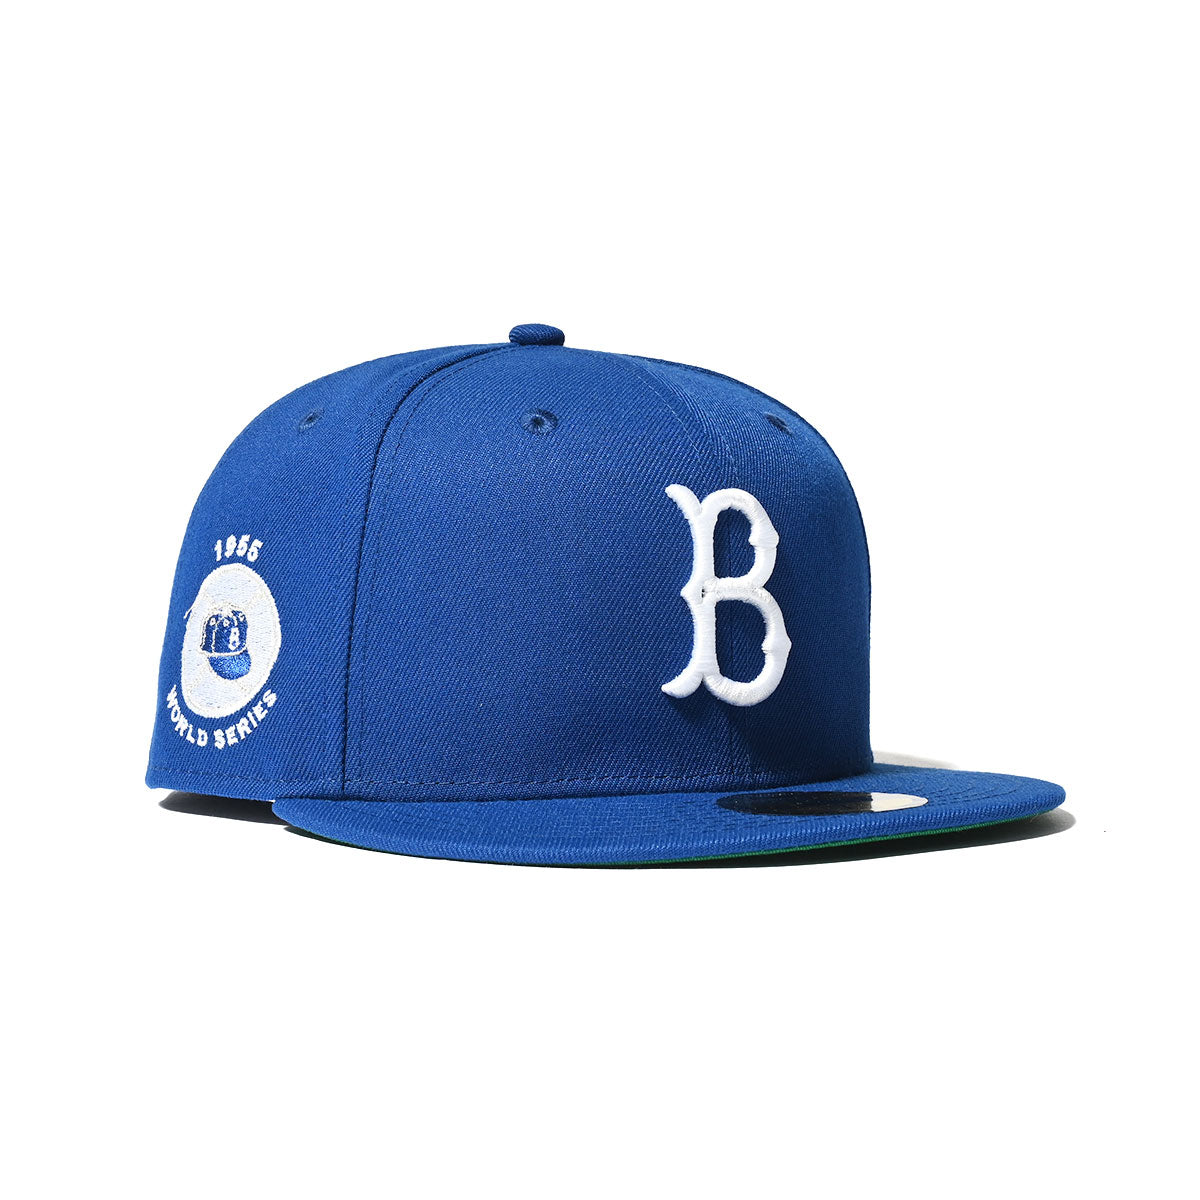 NEW ERA Brooklyn Dodgers - WS 1955 59FIFTY LIGHT ROYAL【70757824